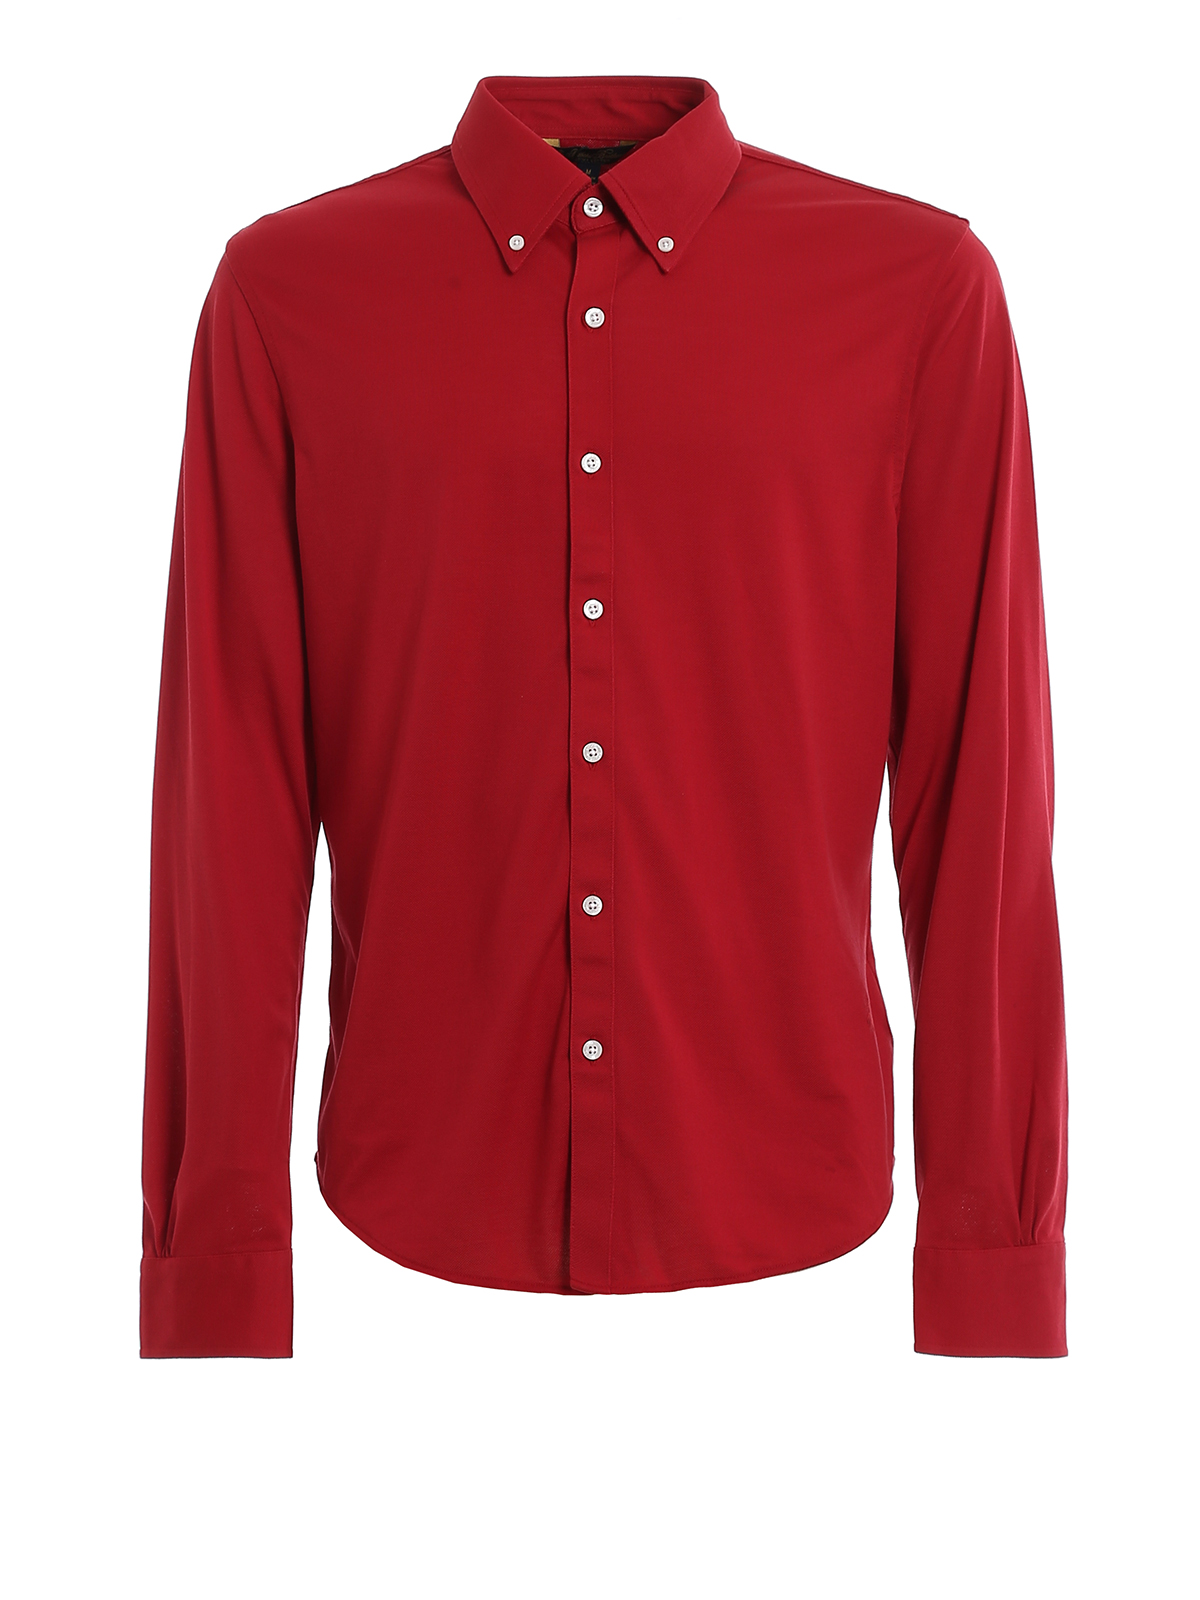 Cotton Piquet Bandana Shirt in red